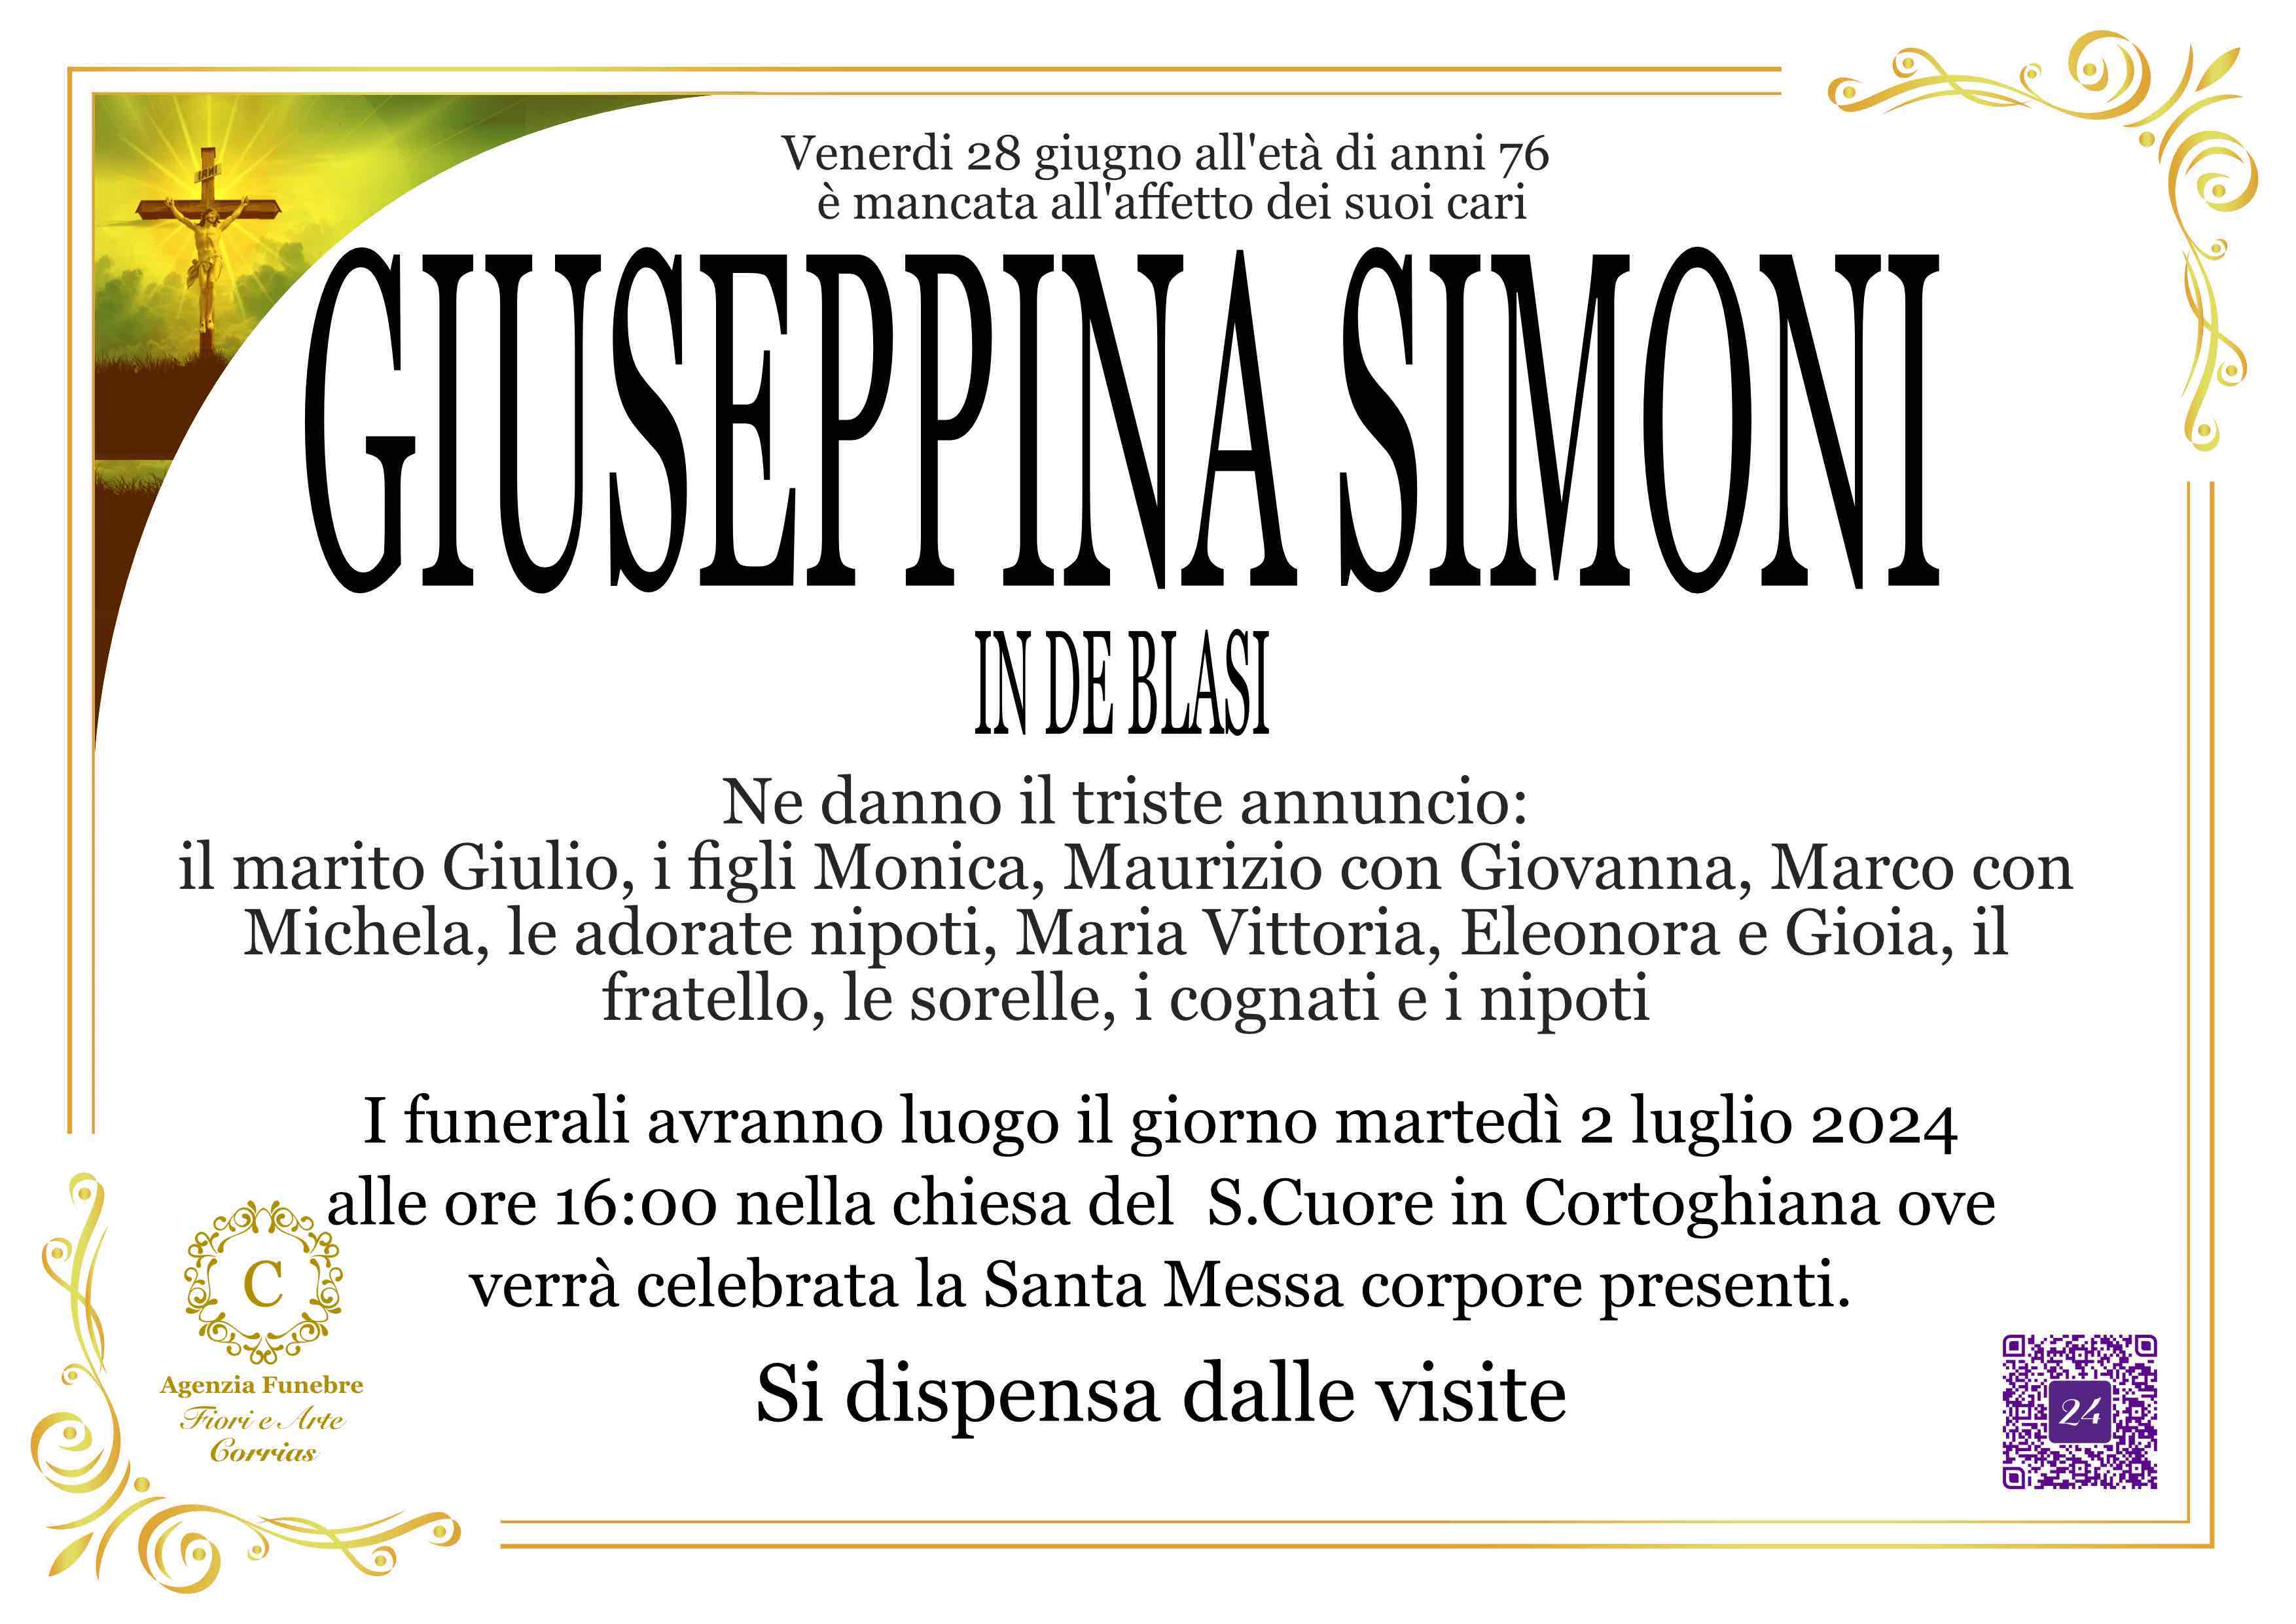 Giuseppina Simoni